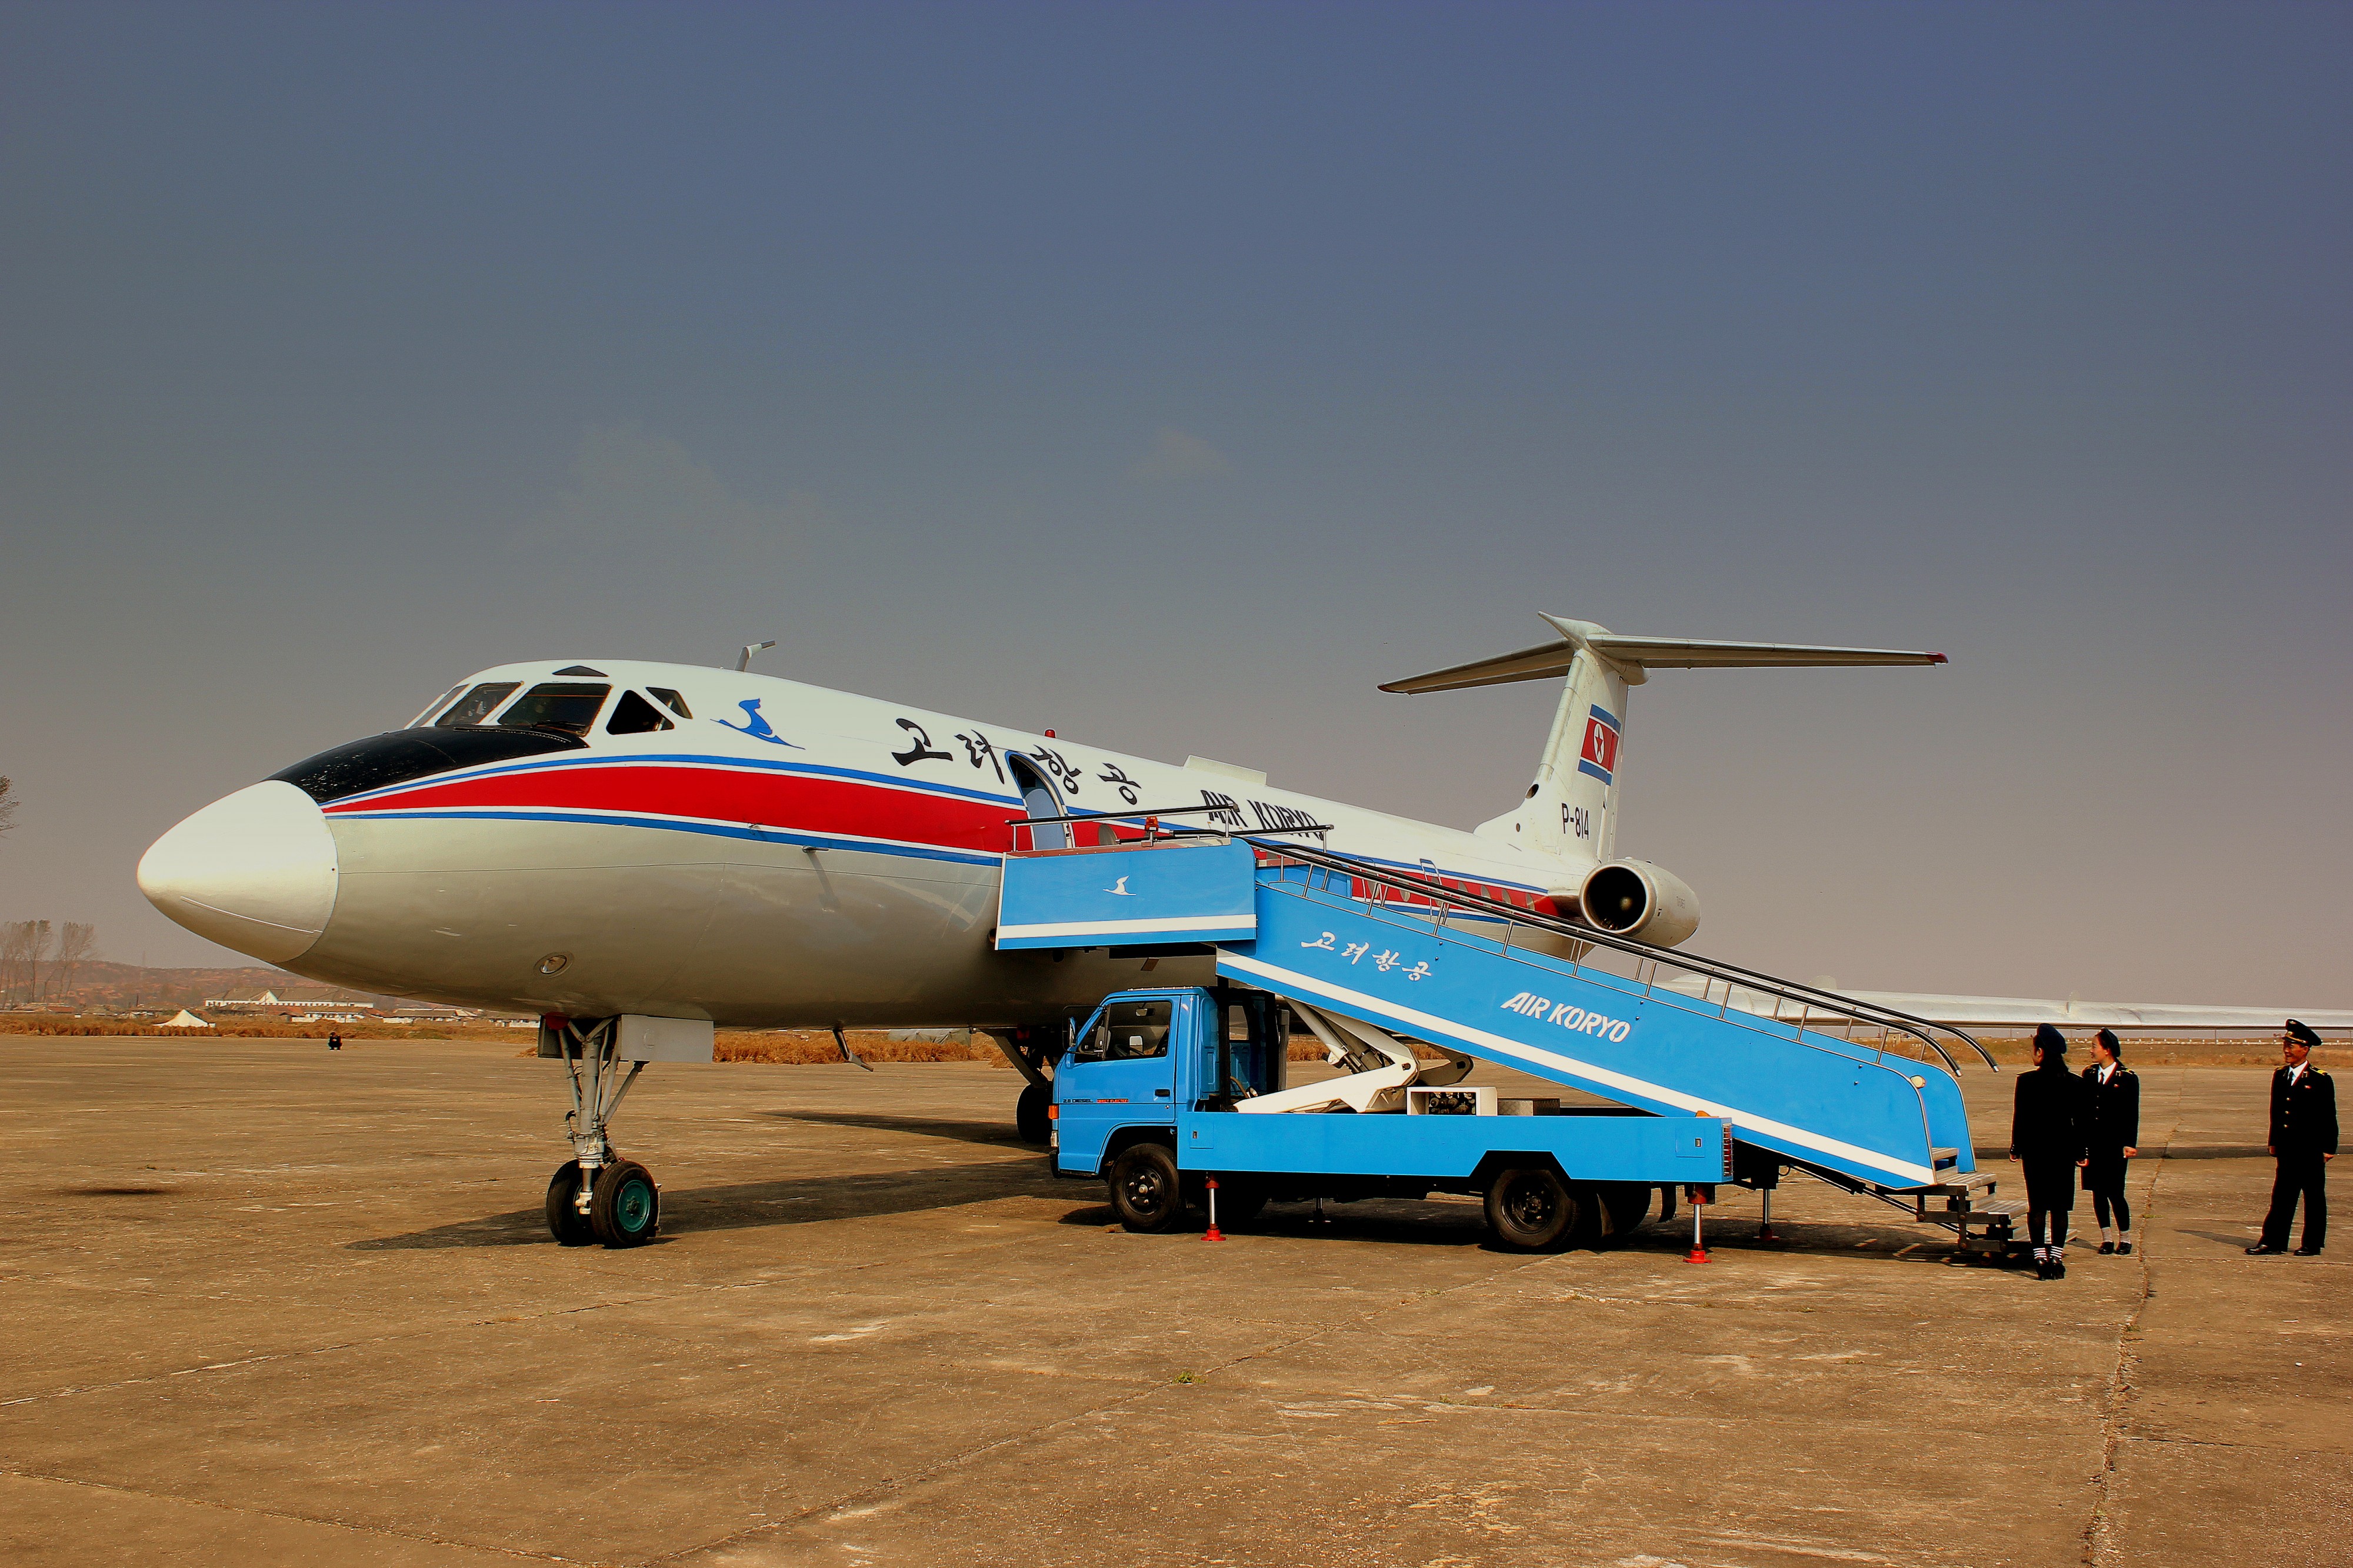 AIR KORYO TUPOLEV TU134 P814 FLIGHT JS5205 ON ARRIVAL AT SONDOK HAMHUNG AIRPORT DPR KOREA OCT 2012 (8157525391)